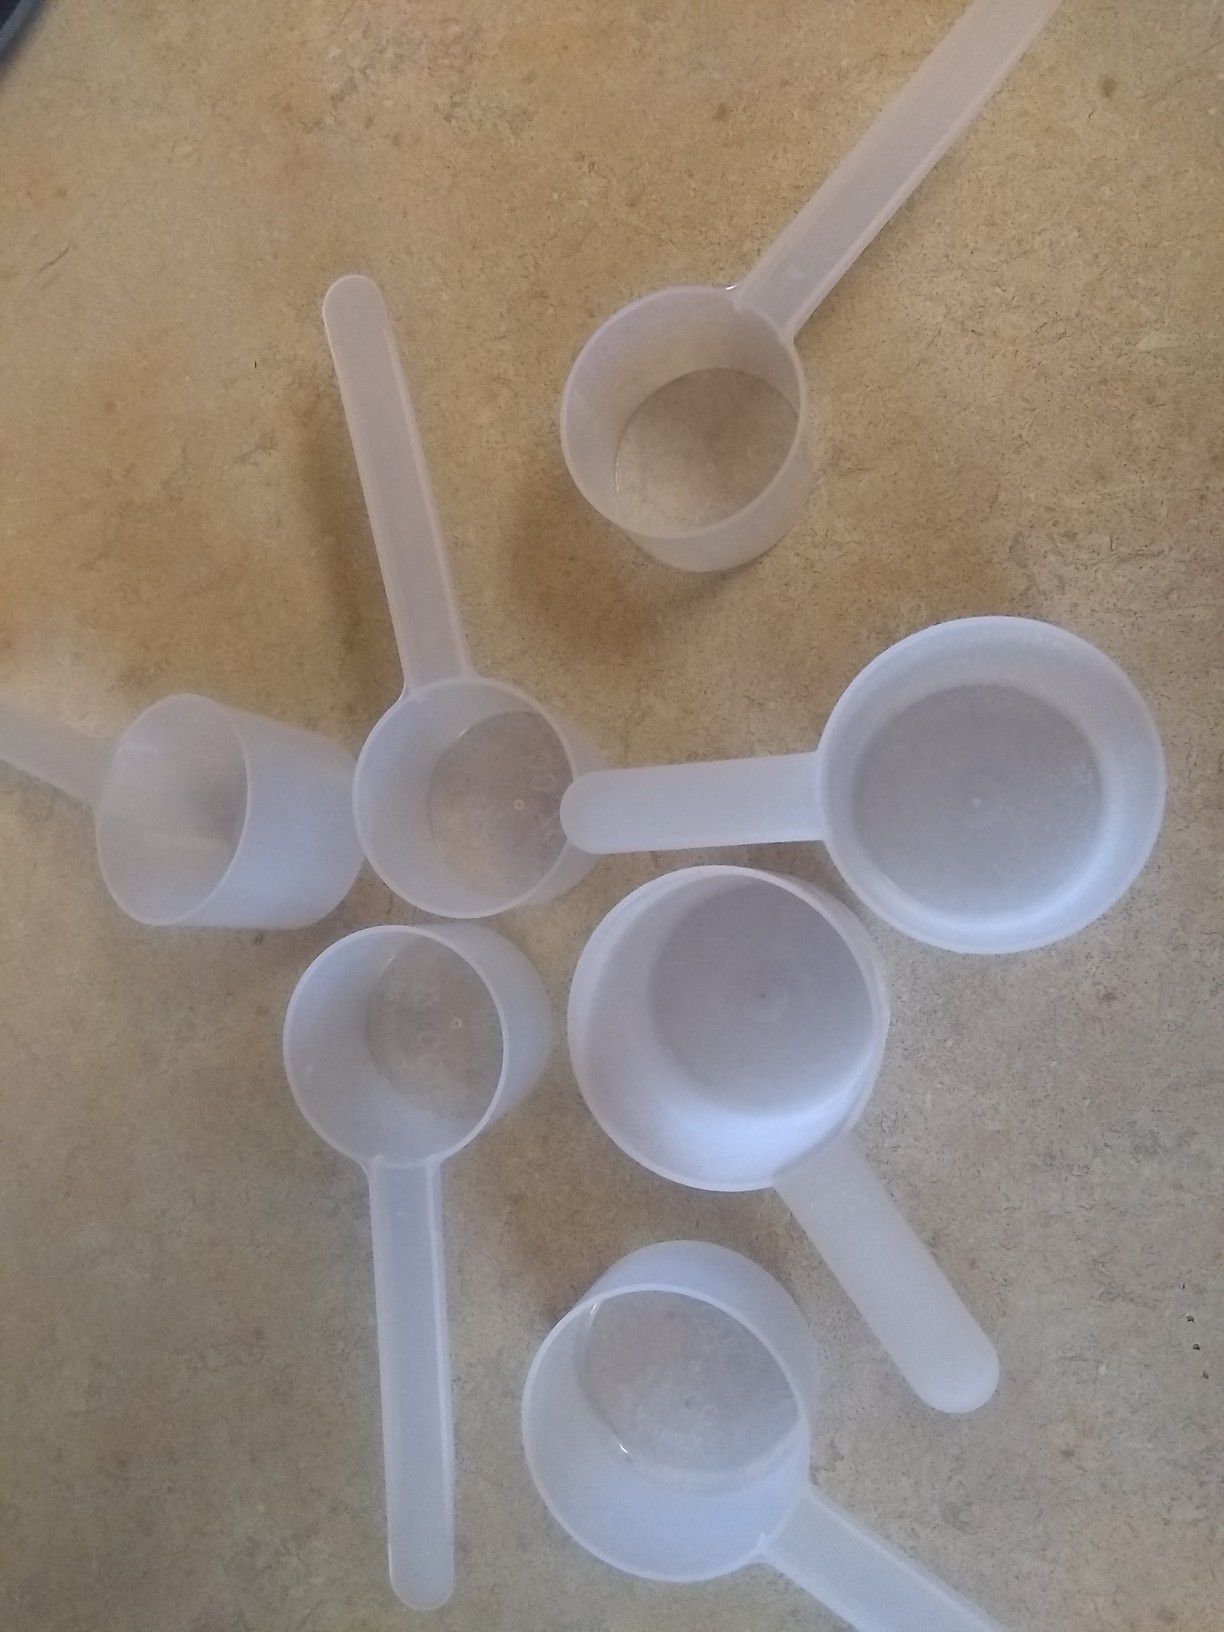 Plastic measurement spoons